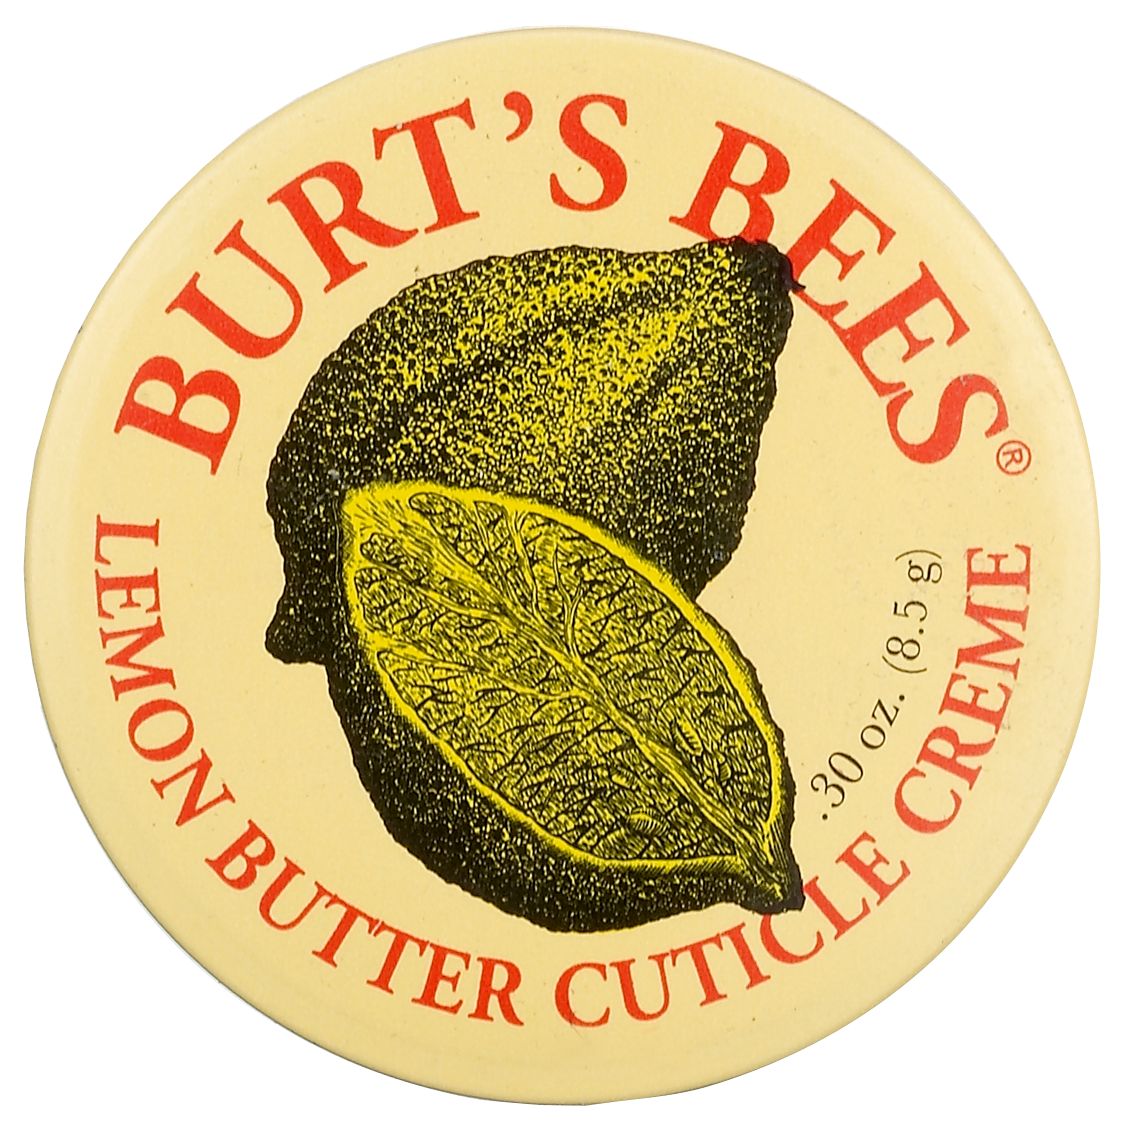 Burt's Bees Lemon Butter Cuticle Creme, 8.5g